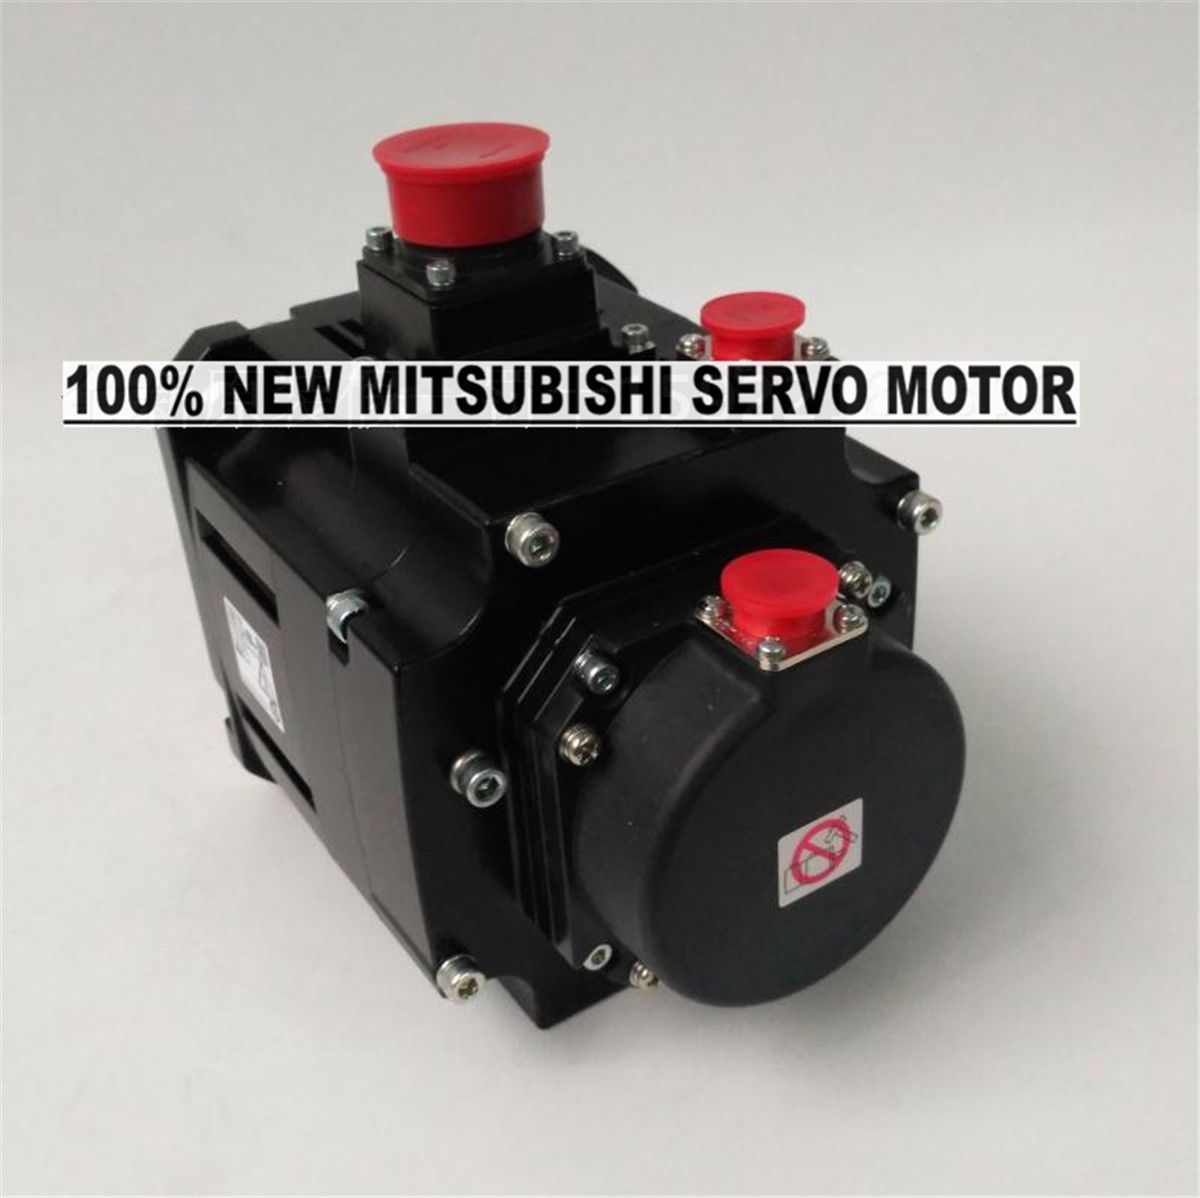 Brand New Mitsubishi Servo Motor HG-SR102BJ in box HGSR102BJ - zum Schließen ins Bild klicken